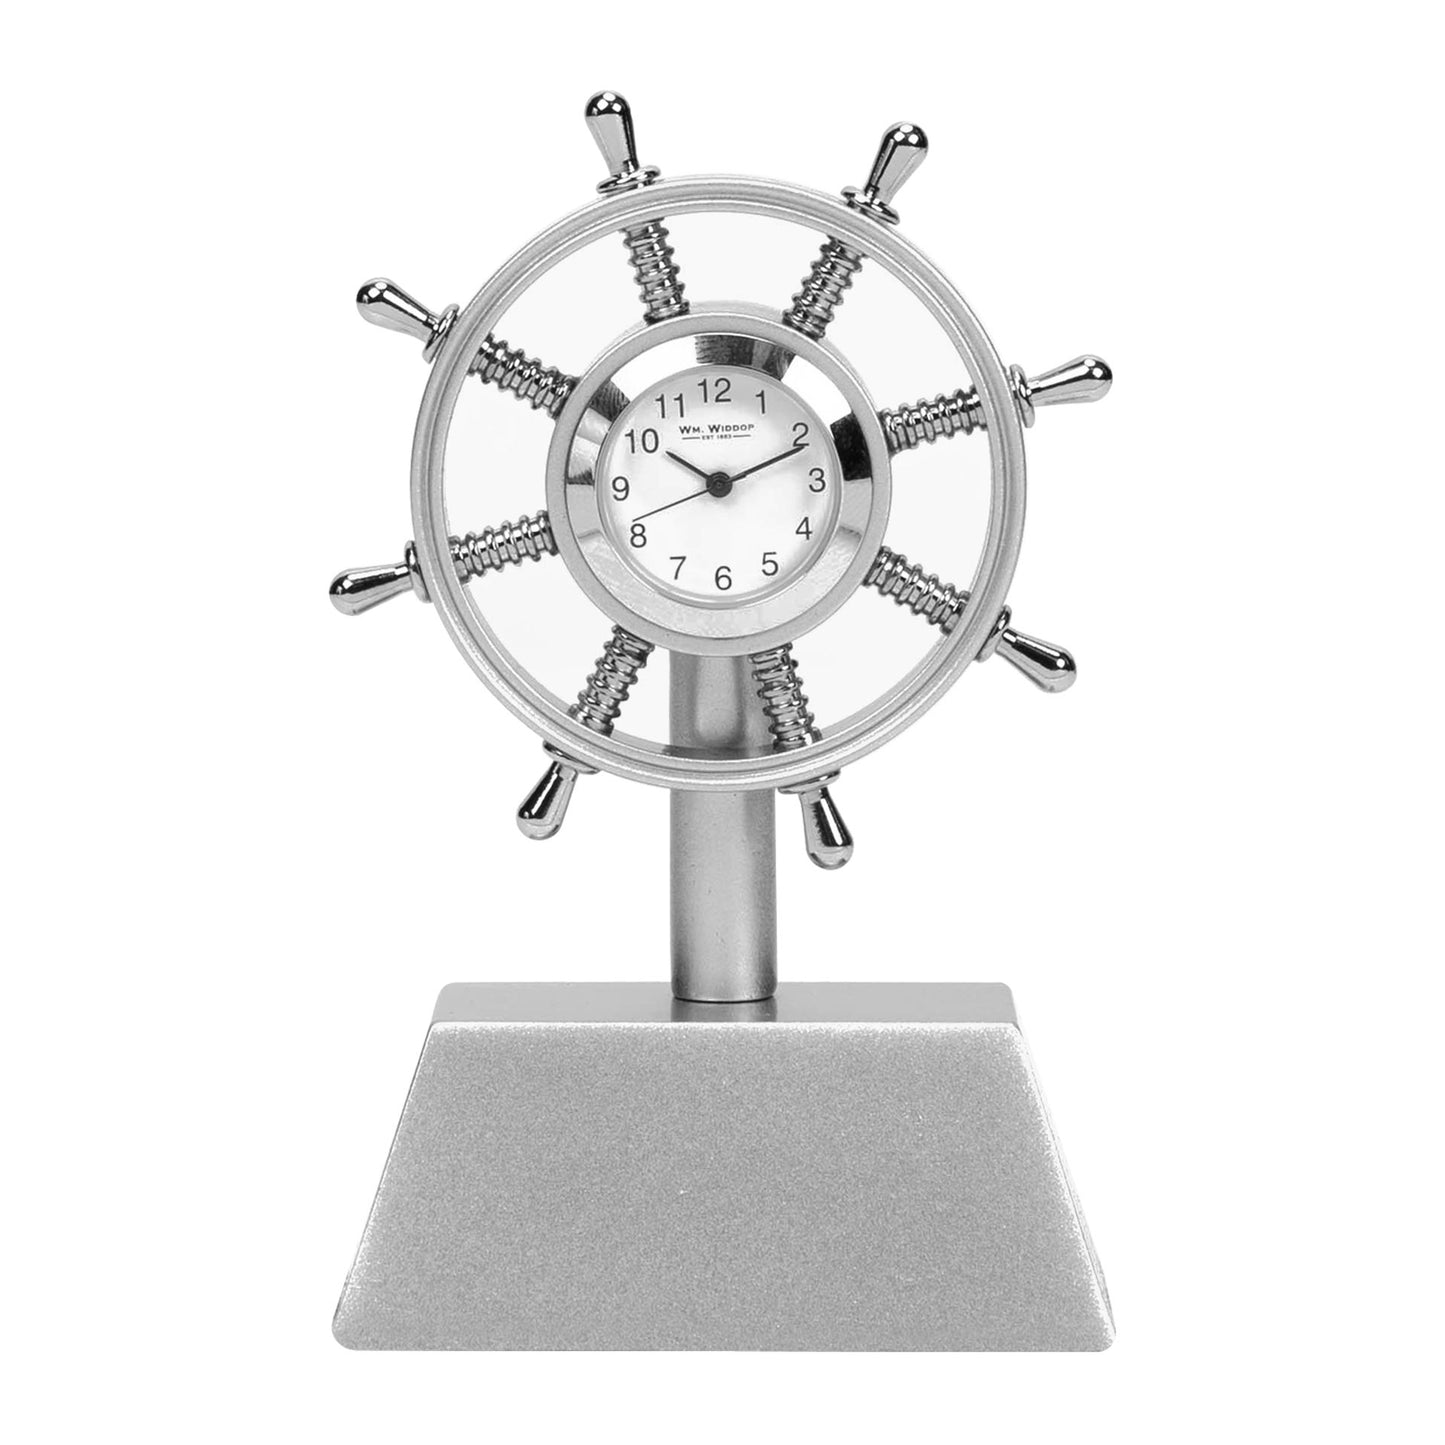 Miniature Ships Wheel Clock